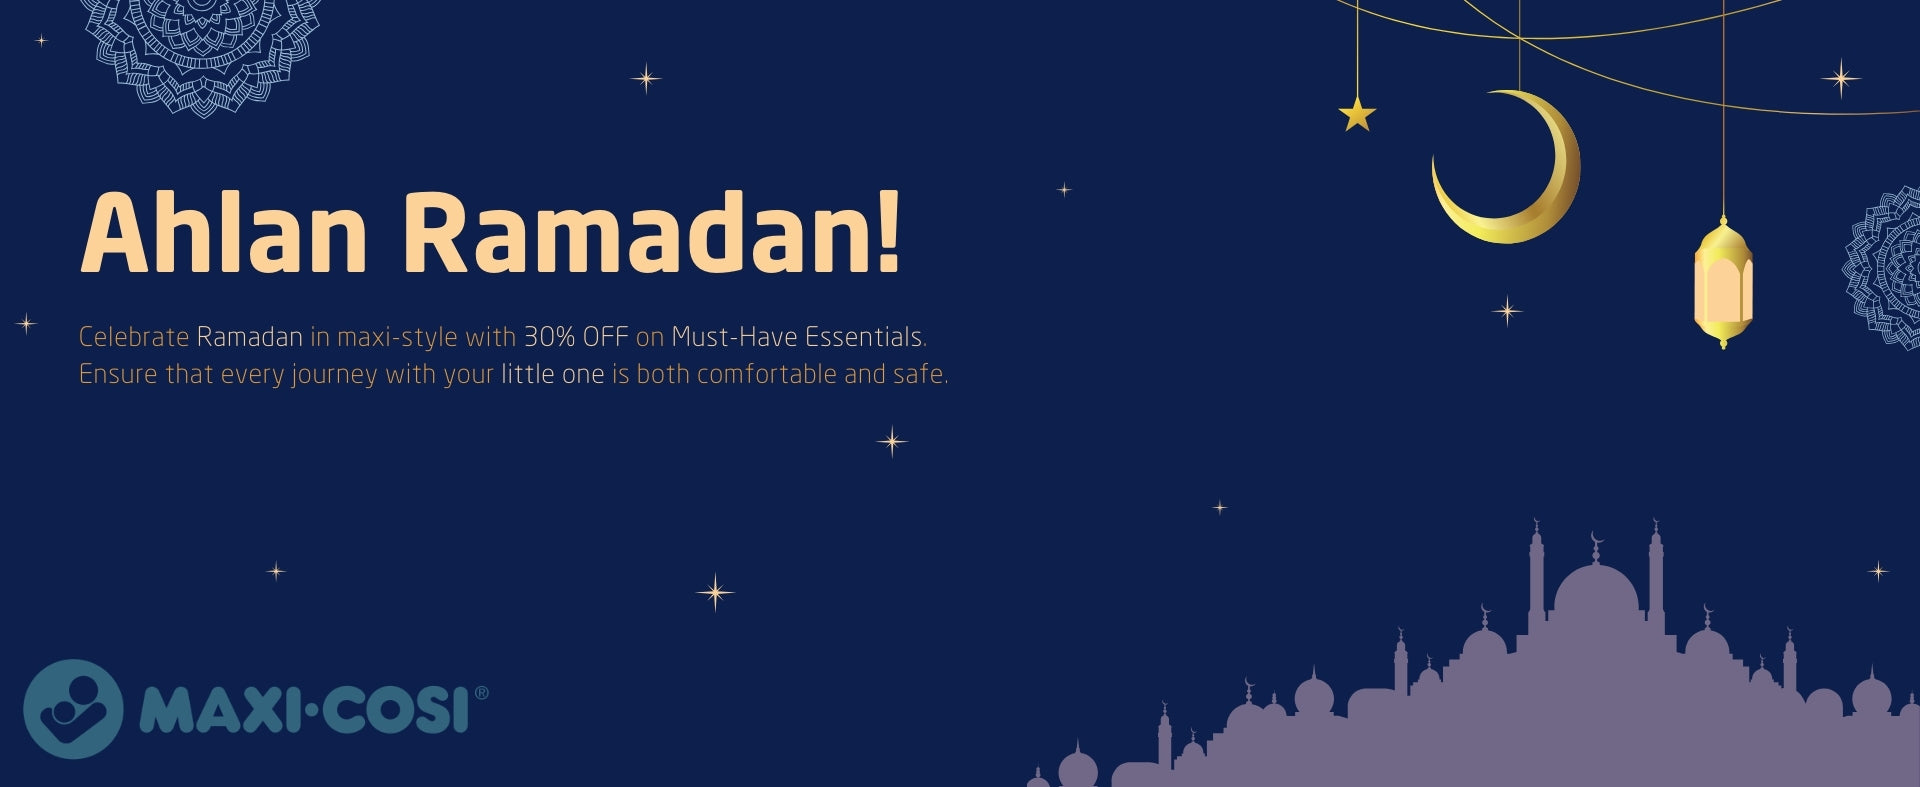 Maxi-Cosi UAE's Blue Desktop Banner for Ramadan Offers